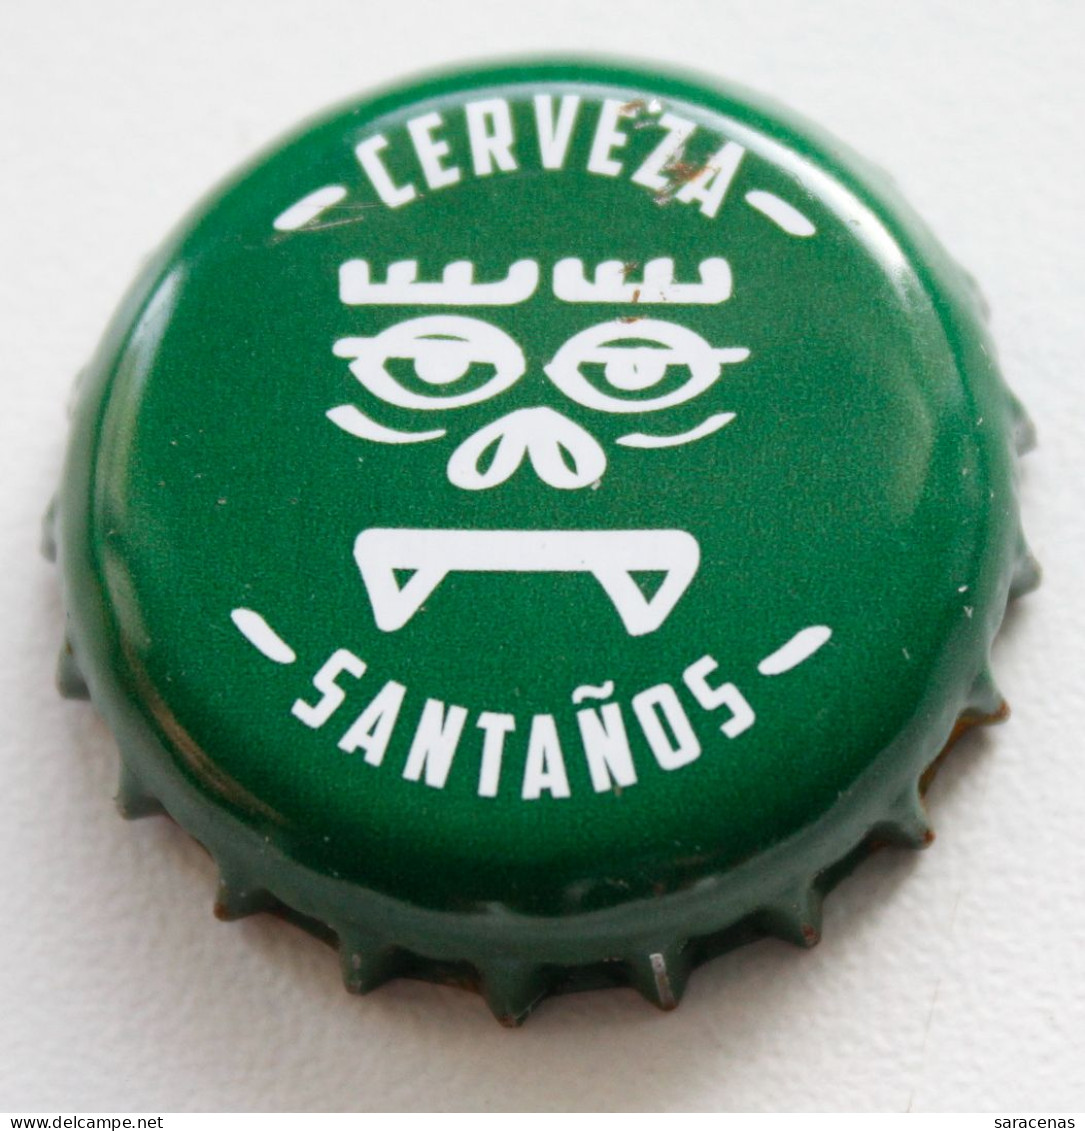 Estonia Cerveza Santanos Face Beer Bottle Cap - Limonade